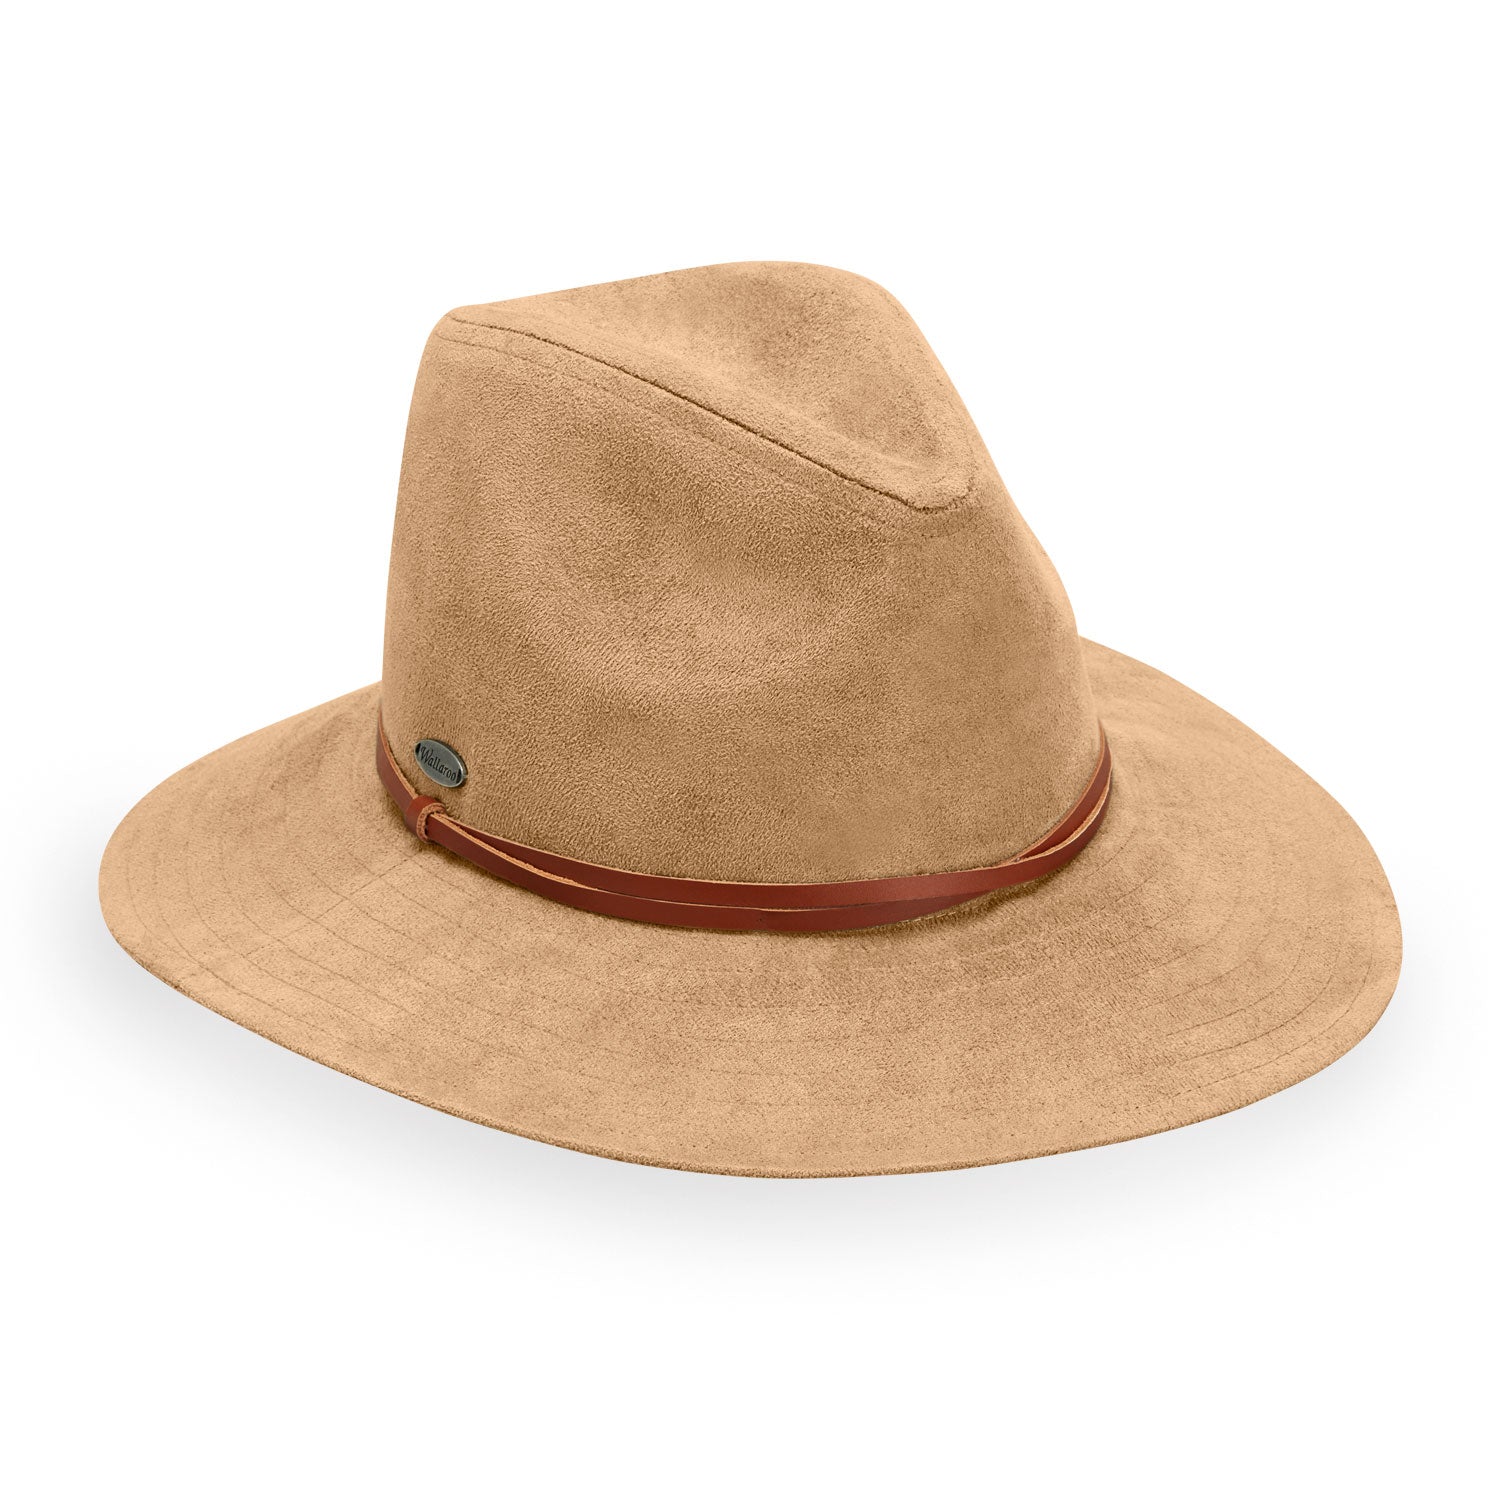 Featuring Front of Women's Adjustable Fedora Style Felt Telluride UPF Sun Hat in Camel from Wallaroo